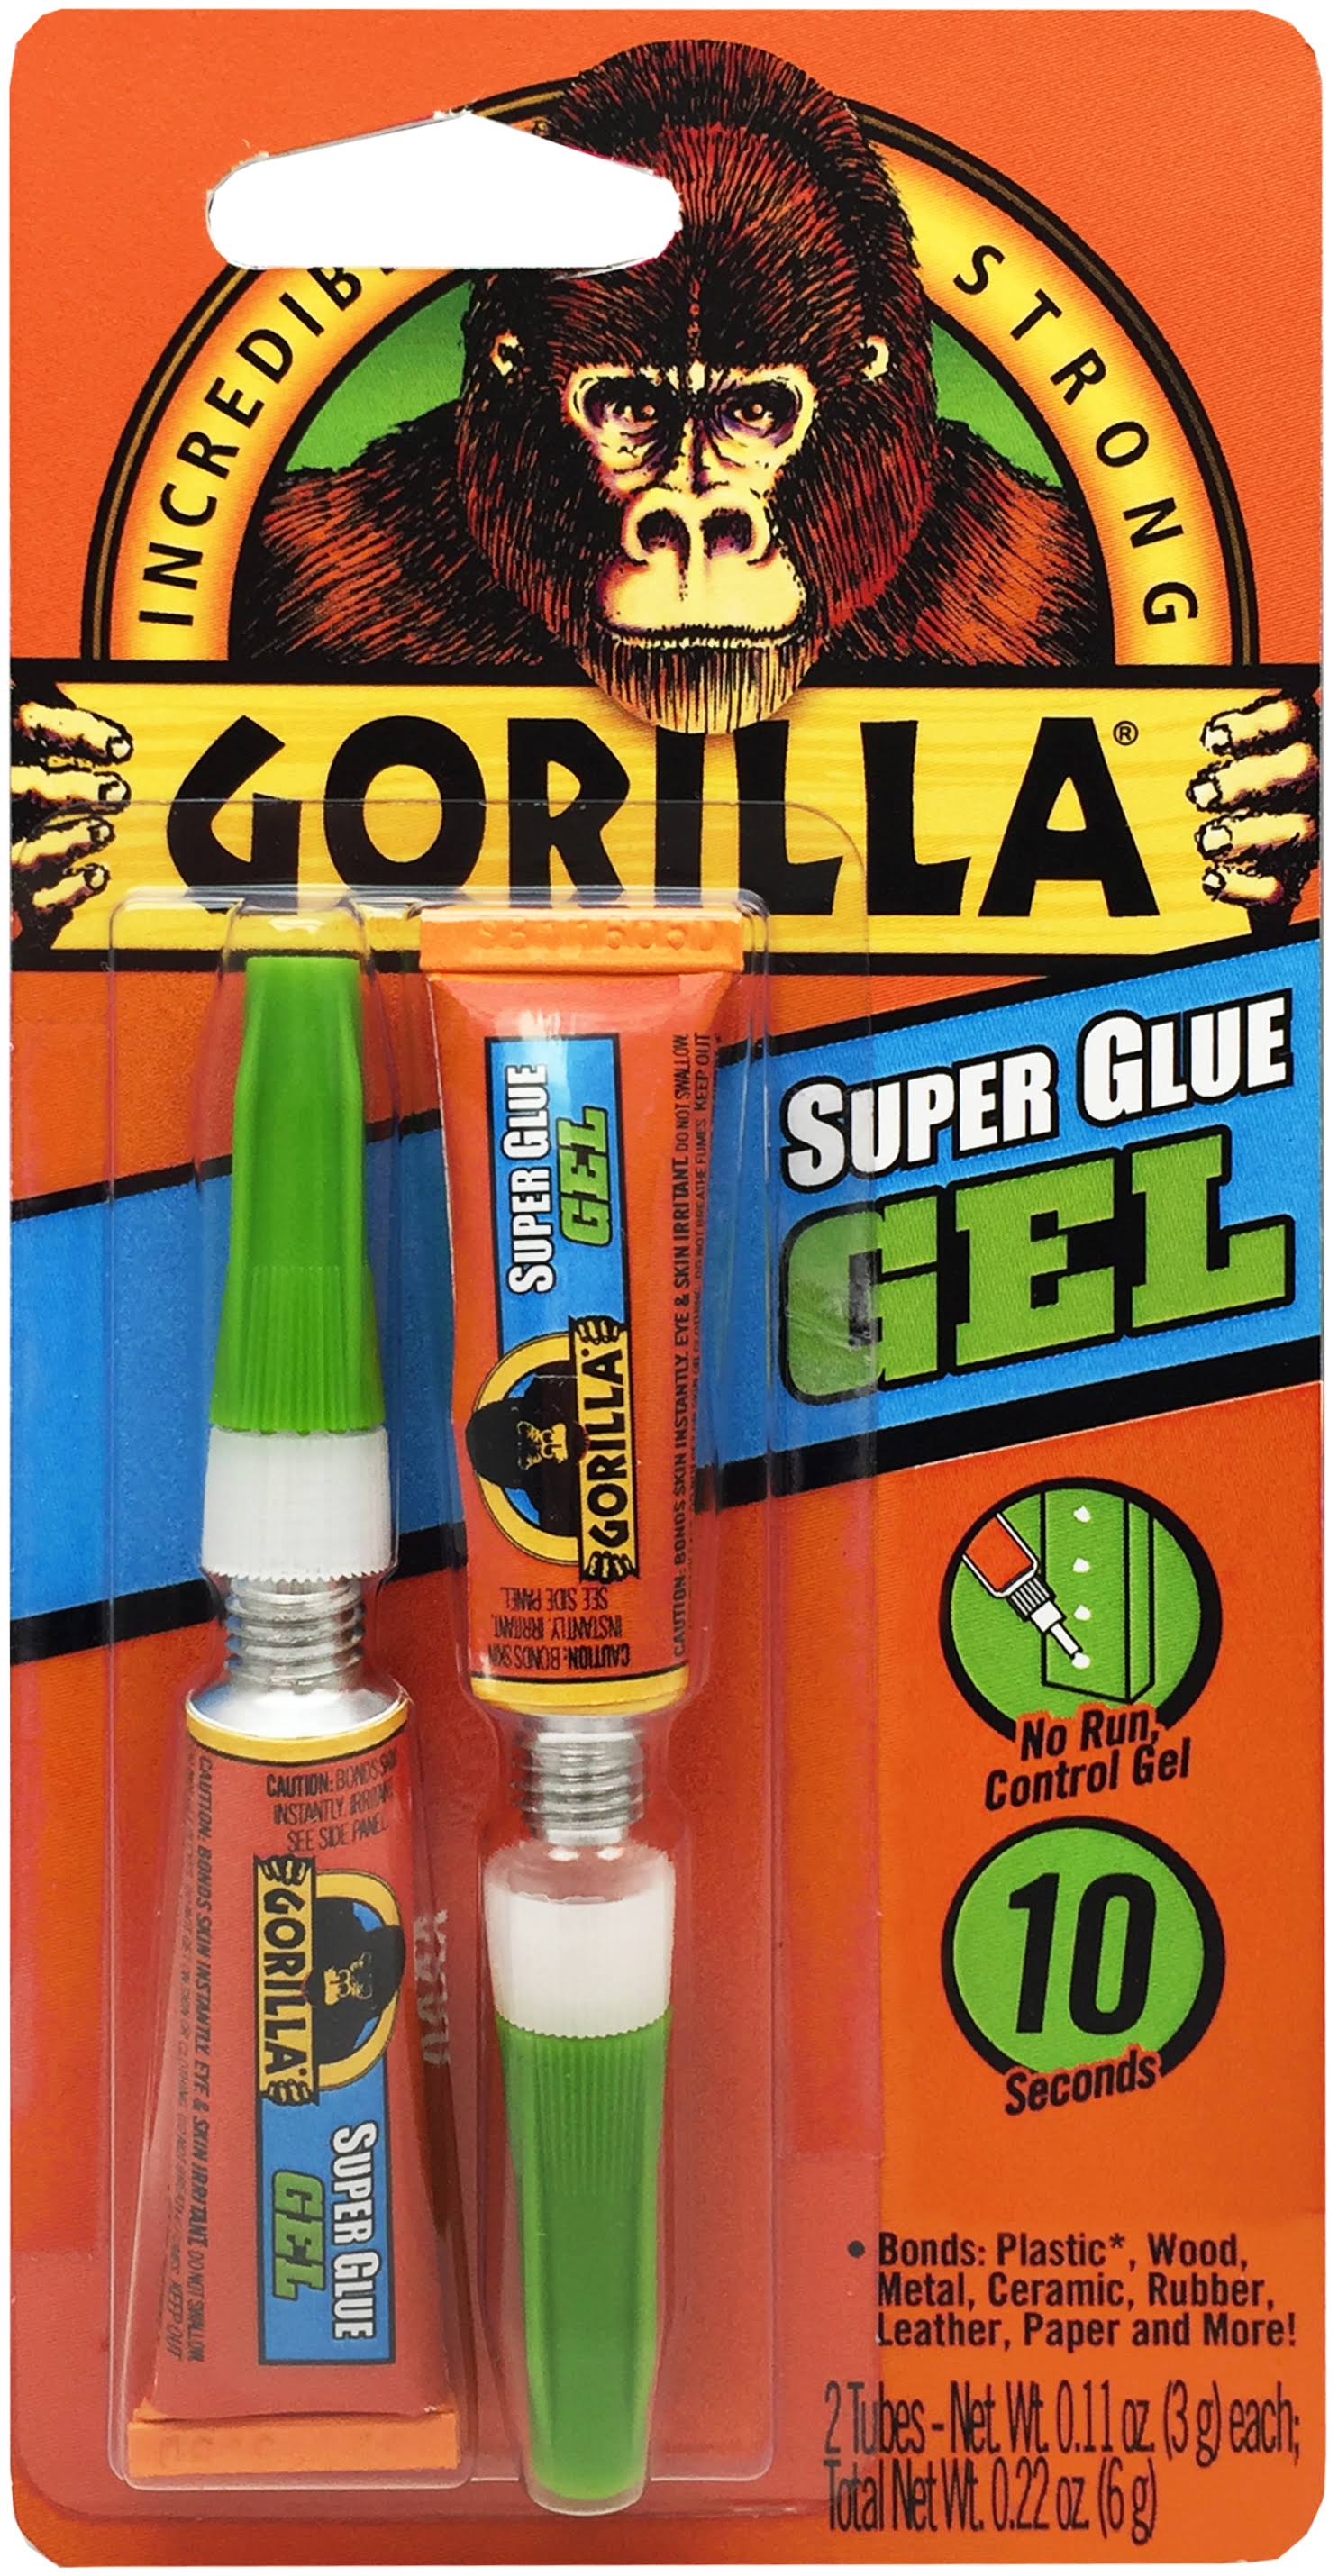 Gorilla 7820001 Super Glue Gel - 6g